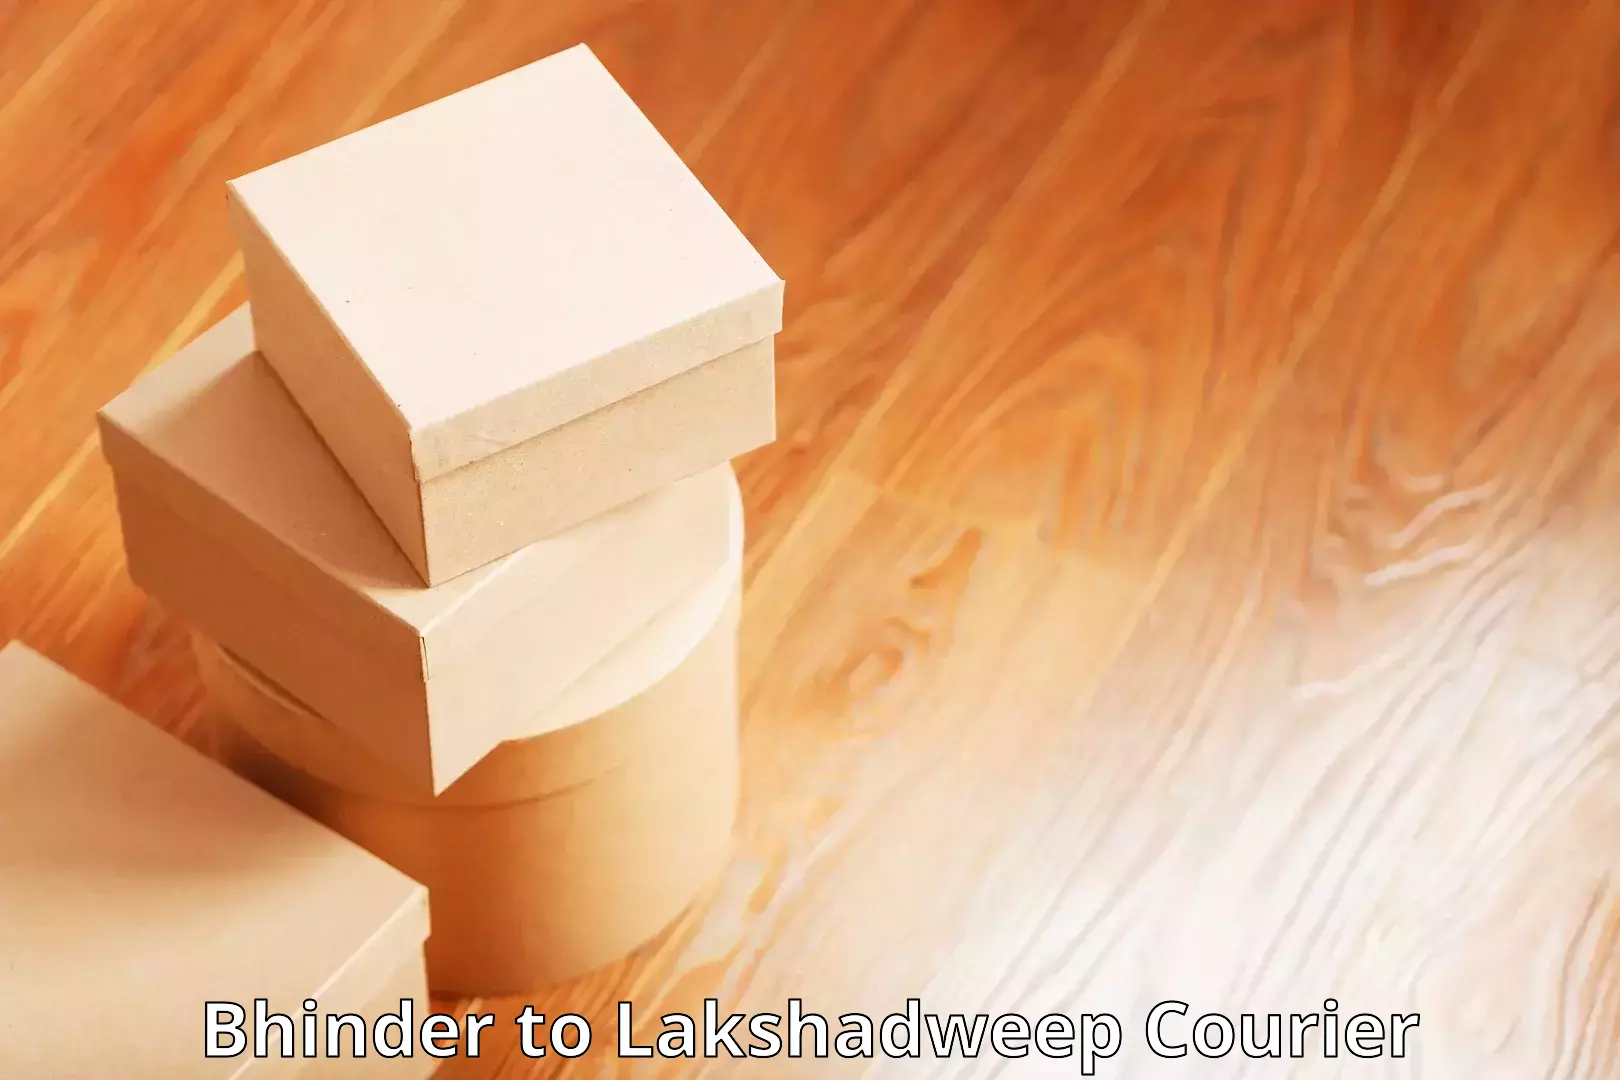 Global logistics network Bhinder to Lakshadweep